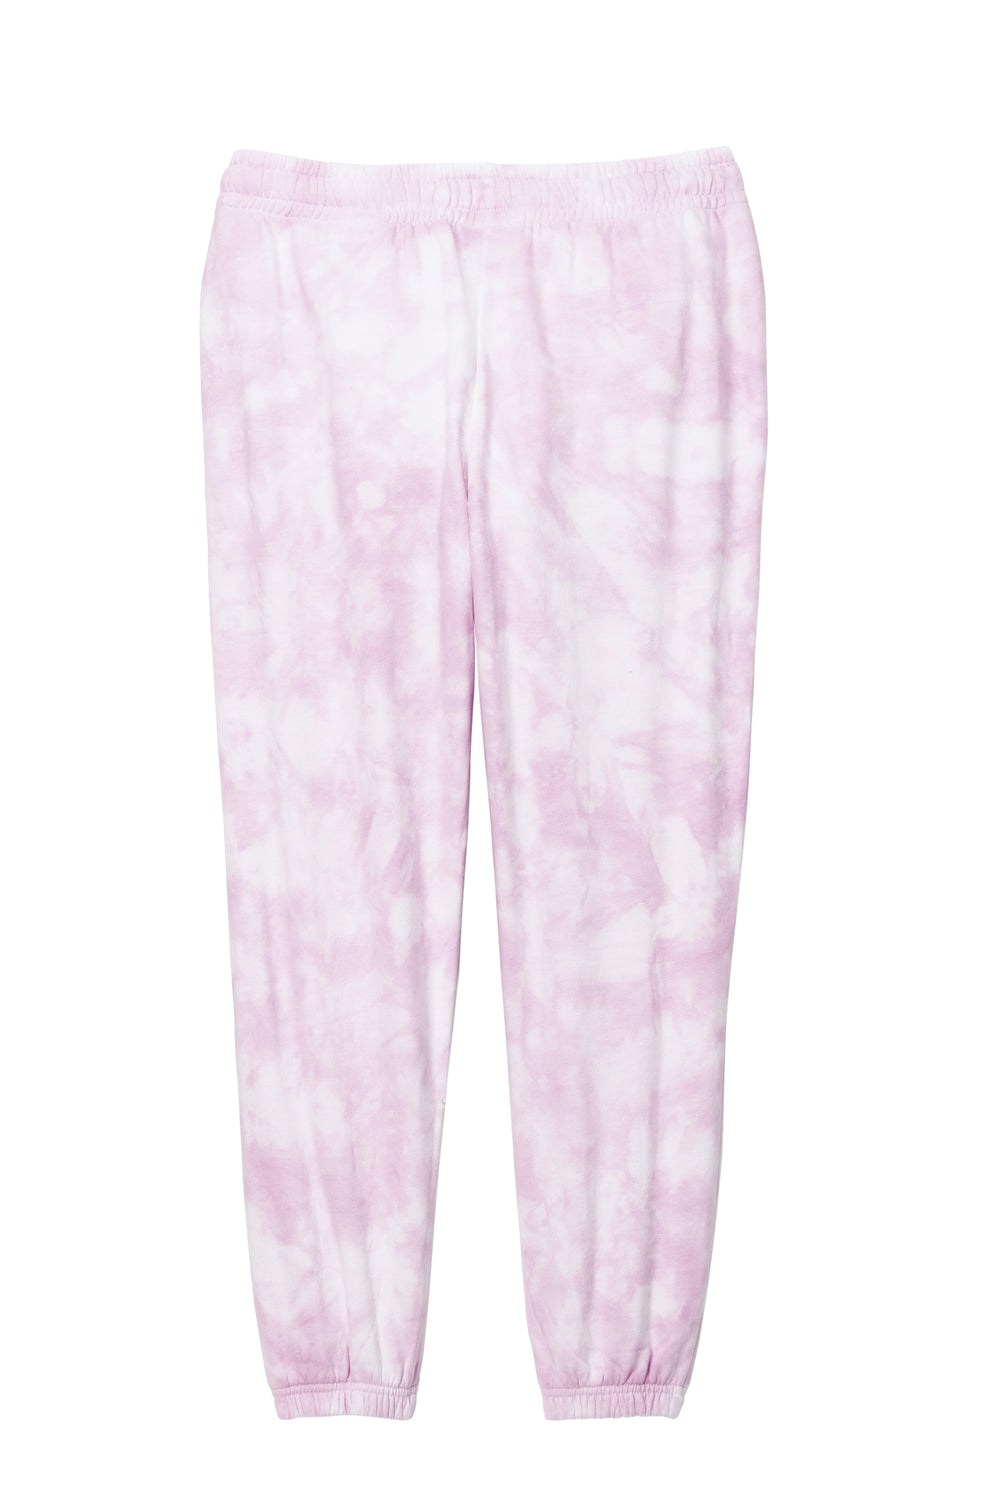 Port & Company Womens Beach Wash Tie Dye Sweatpants w/ Pockets Cerise Pink Flat Back